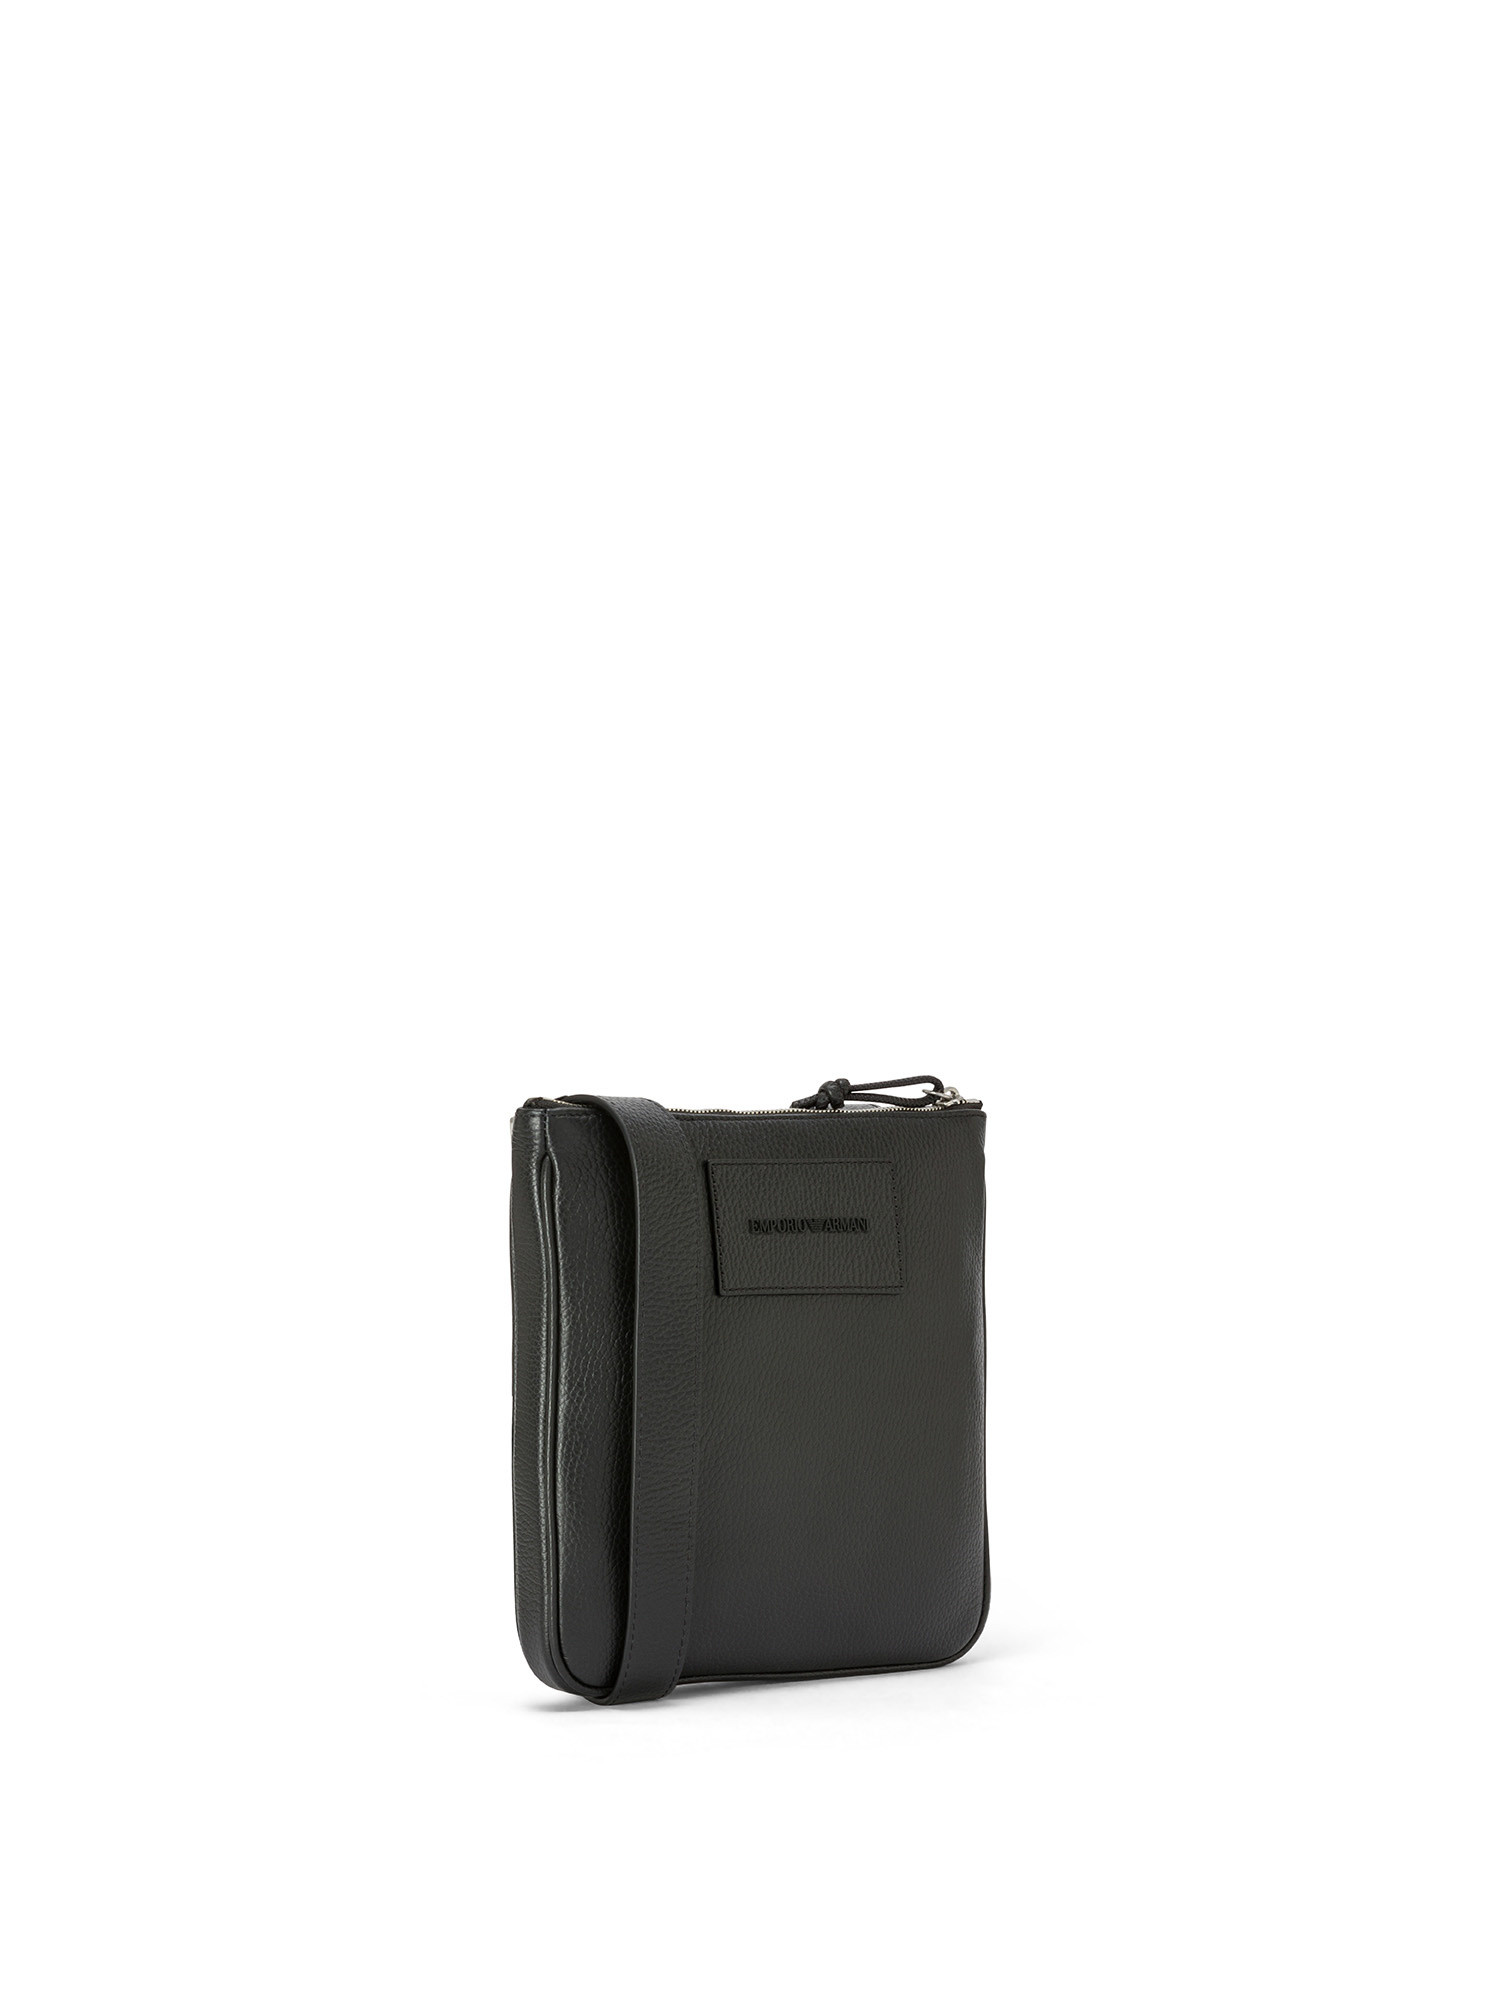 Emporio Armani - Shoulder bag in leather with logo, Black, large image number 1